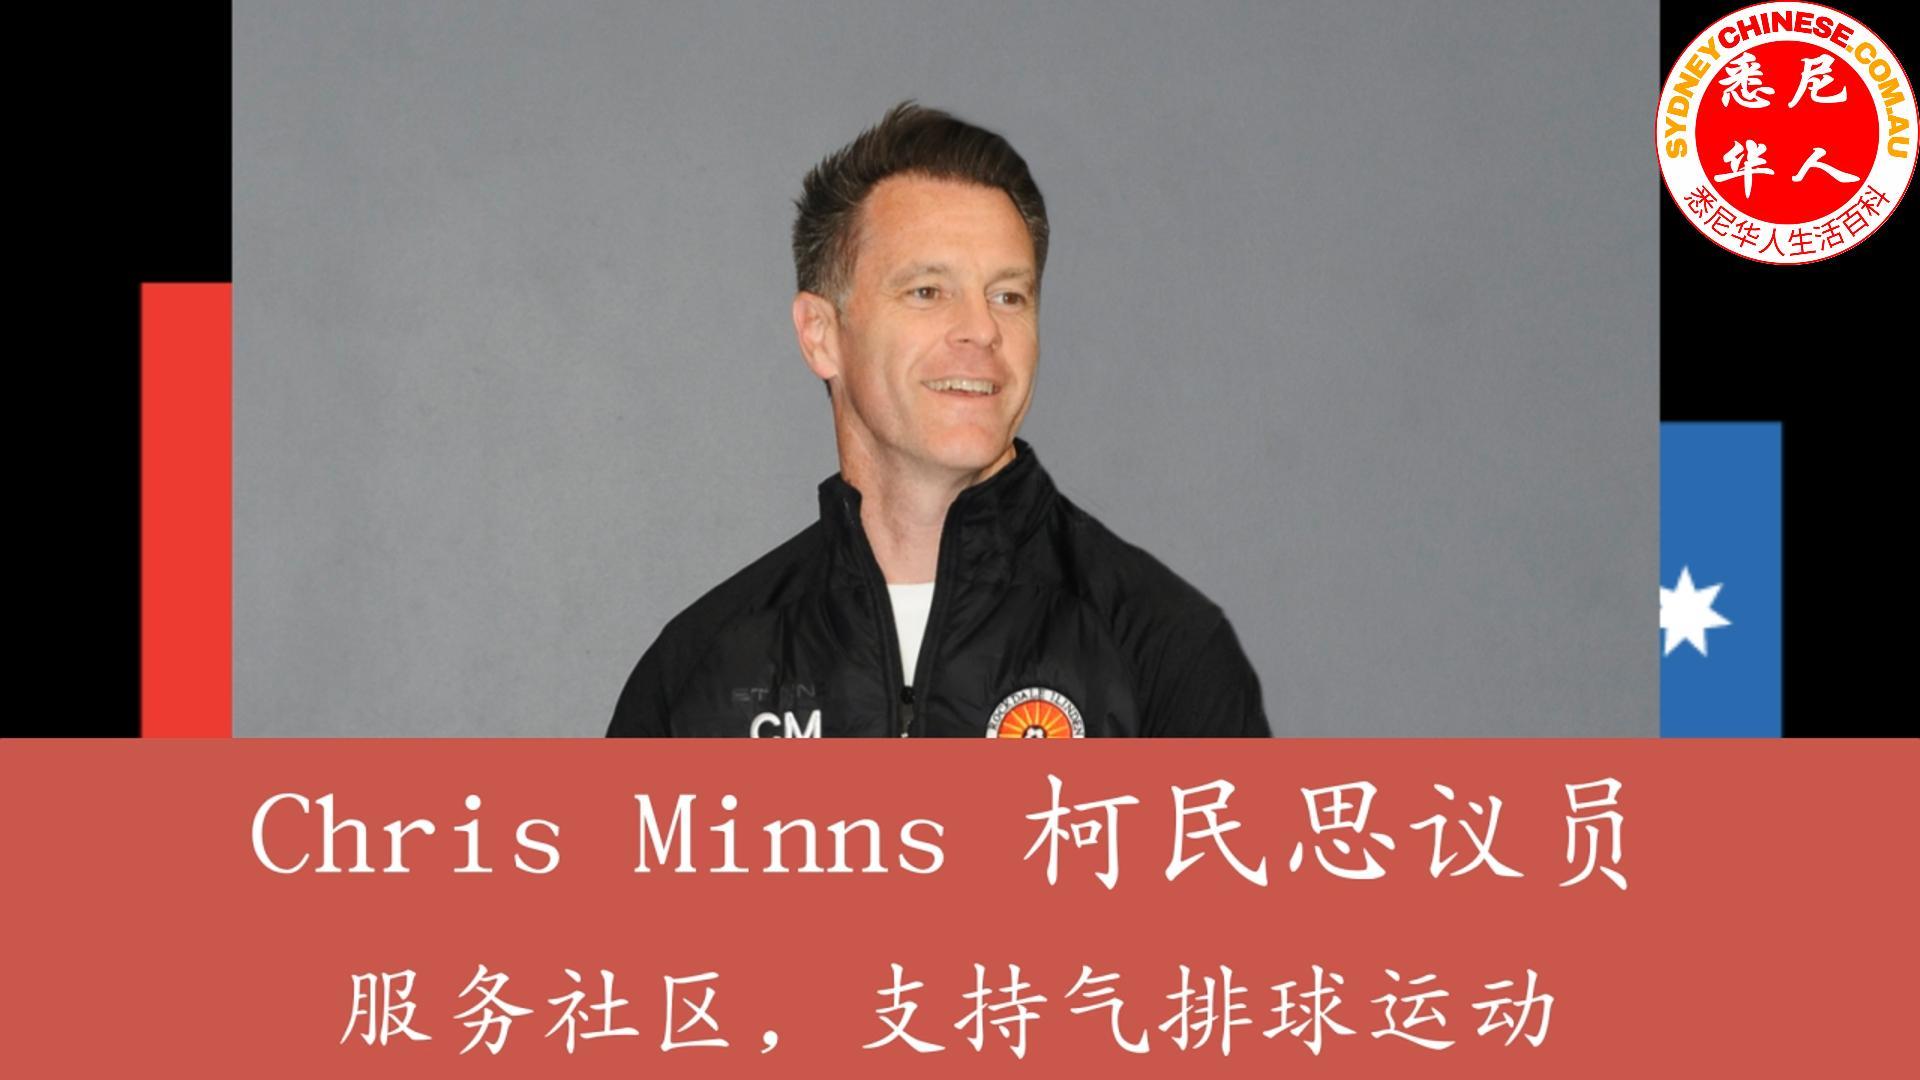 Chris Minns，柯民思议员，服务社区，支持气排球运动